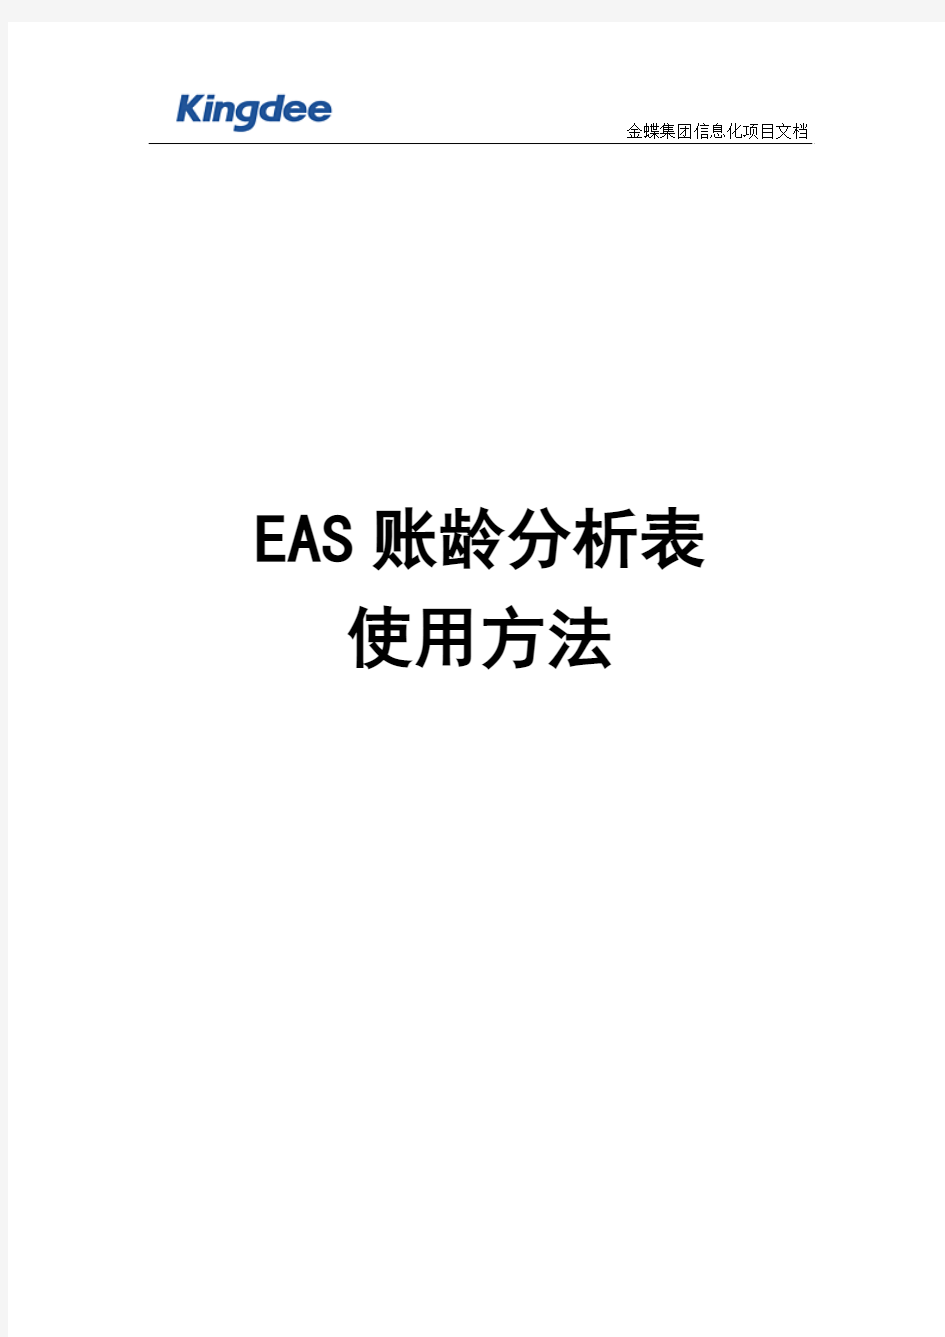 EAS6.0往来管理--账龄分析表使用方法